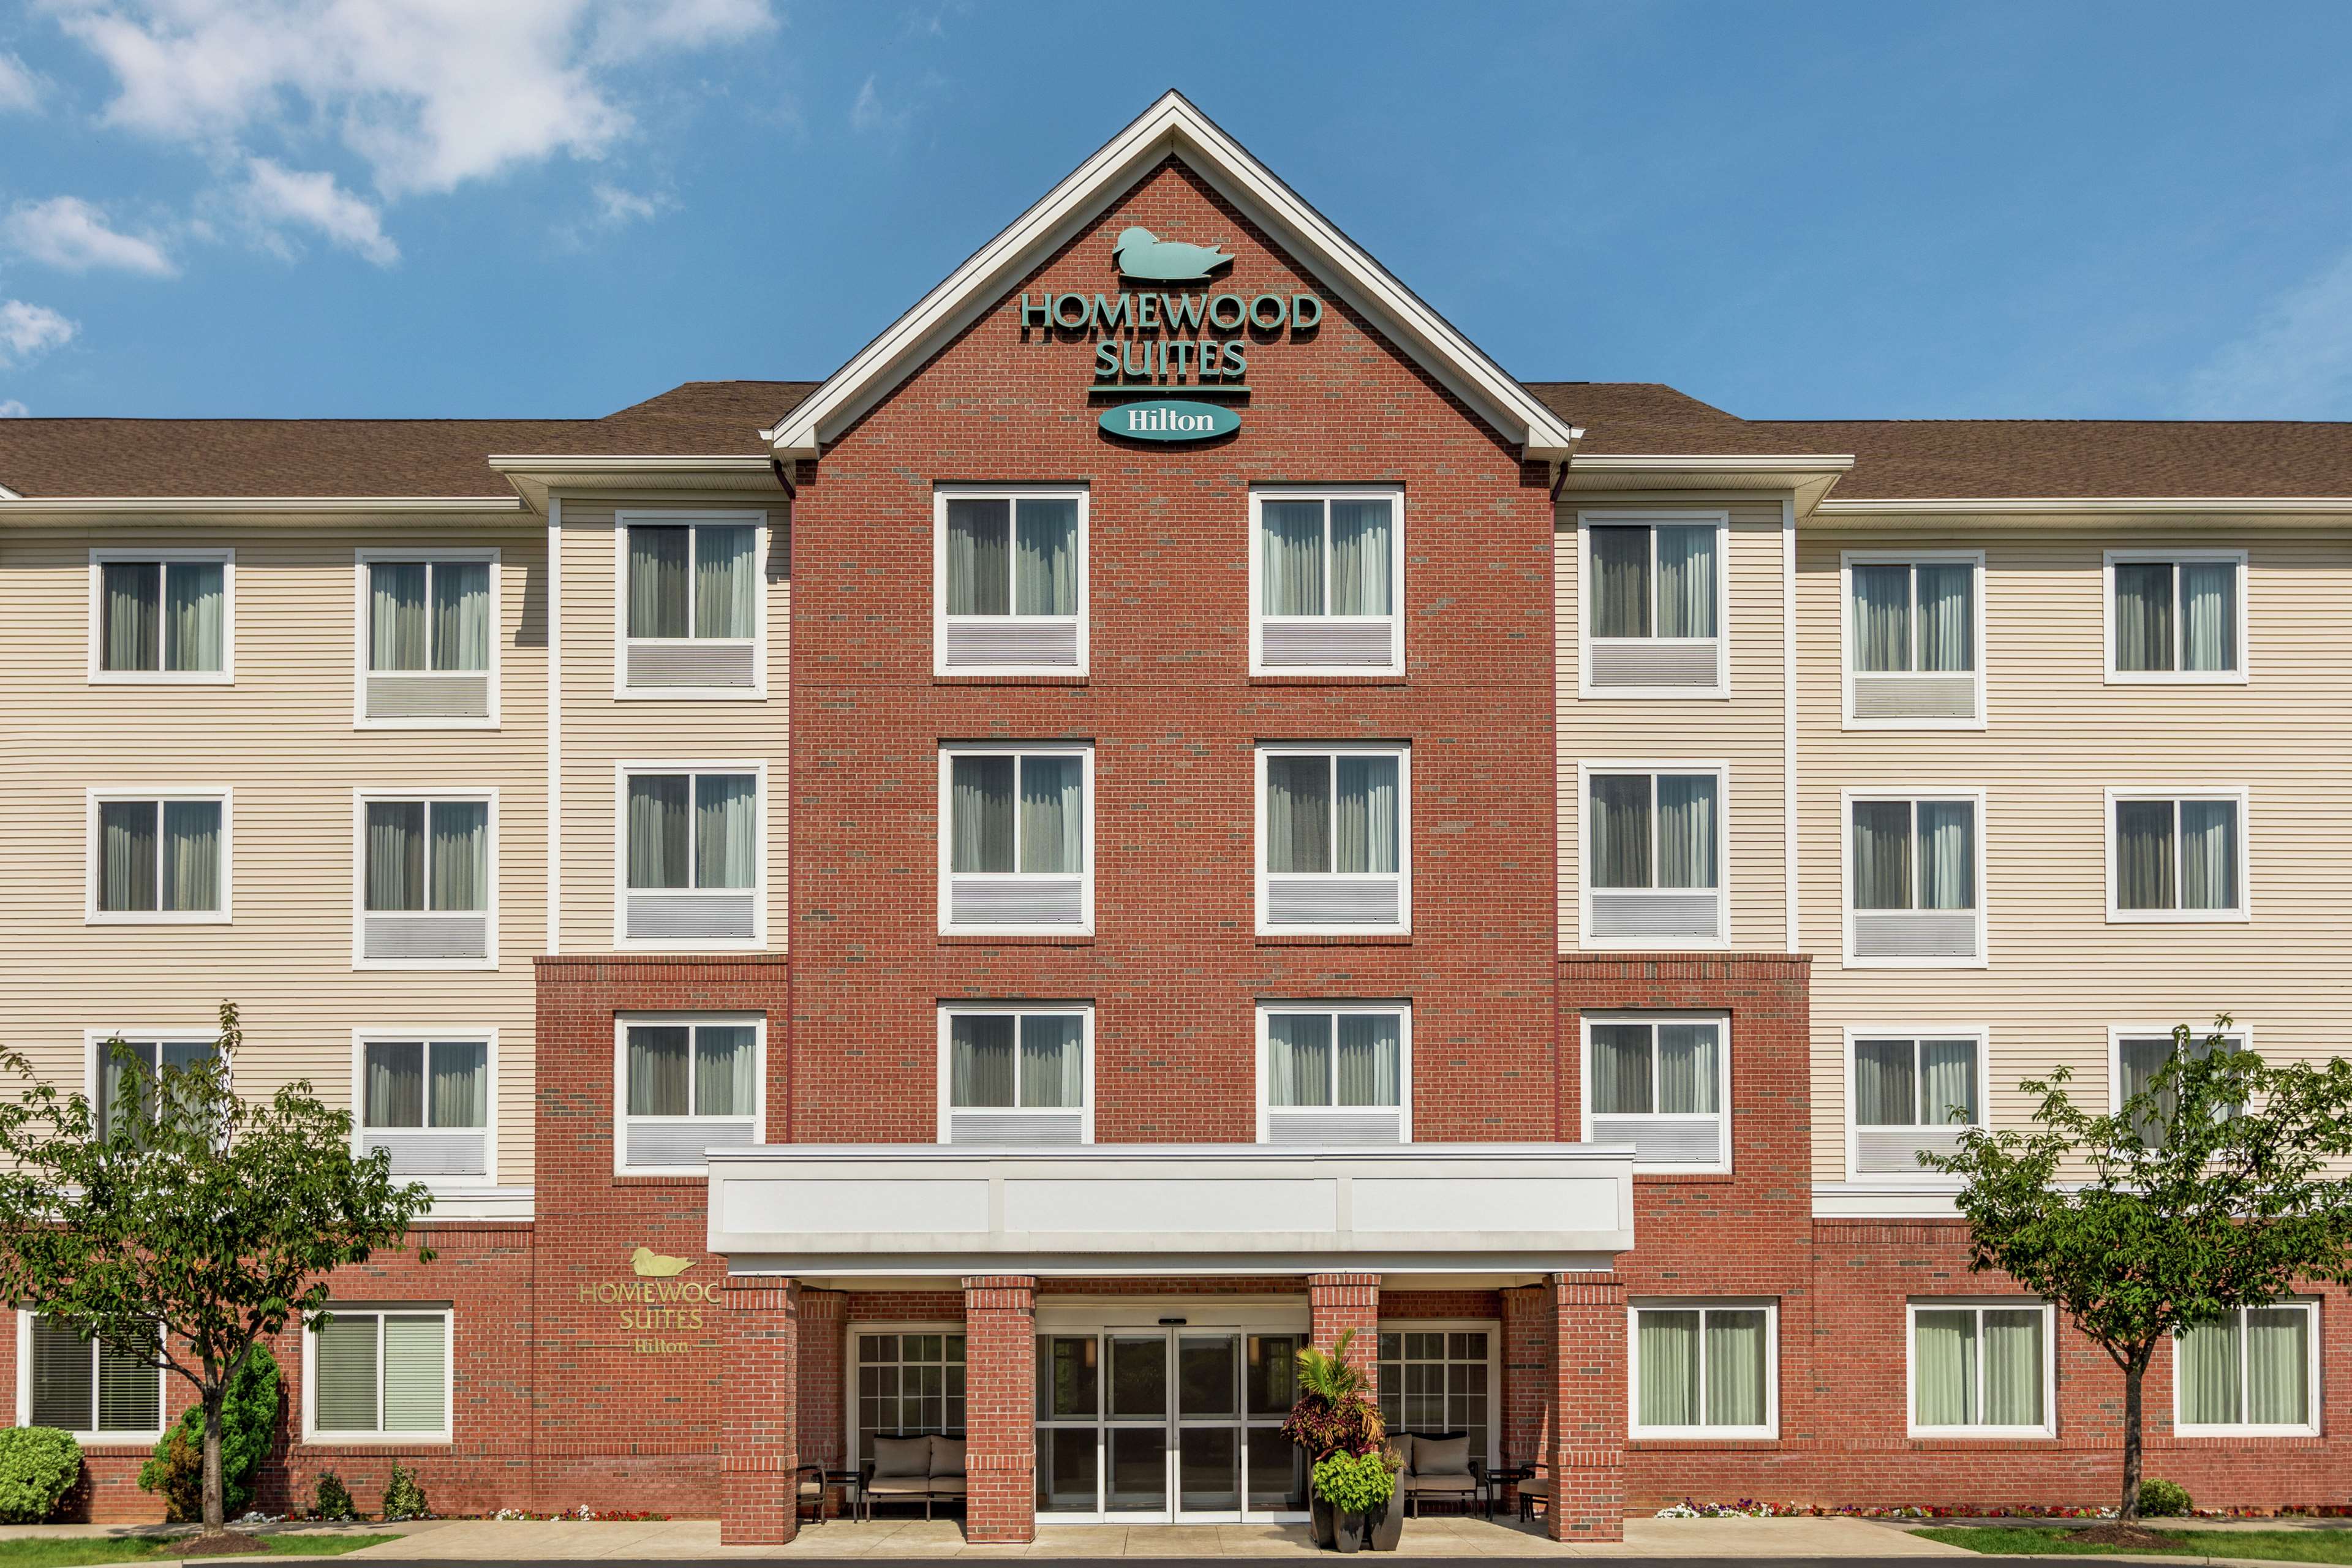 Homewood Suites by Hilton Allentown-West/Fogelsville, PA, Allentown